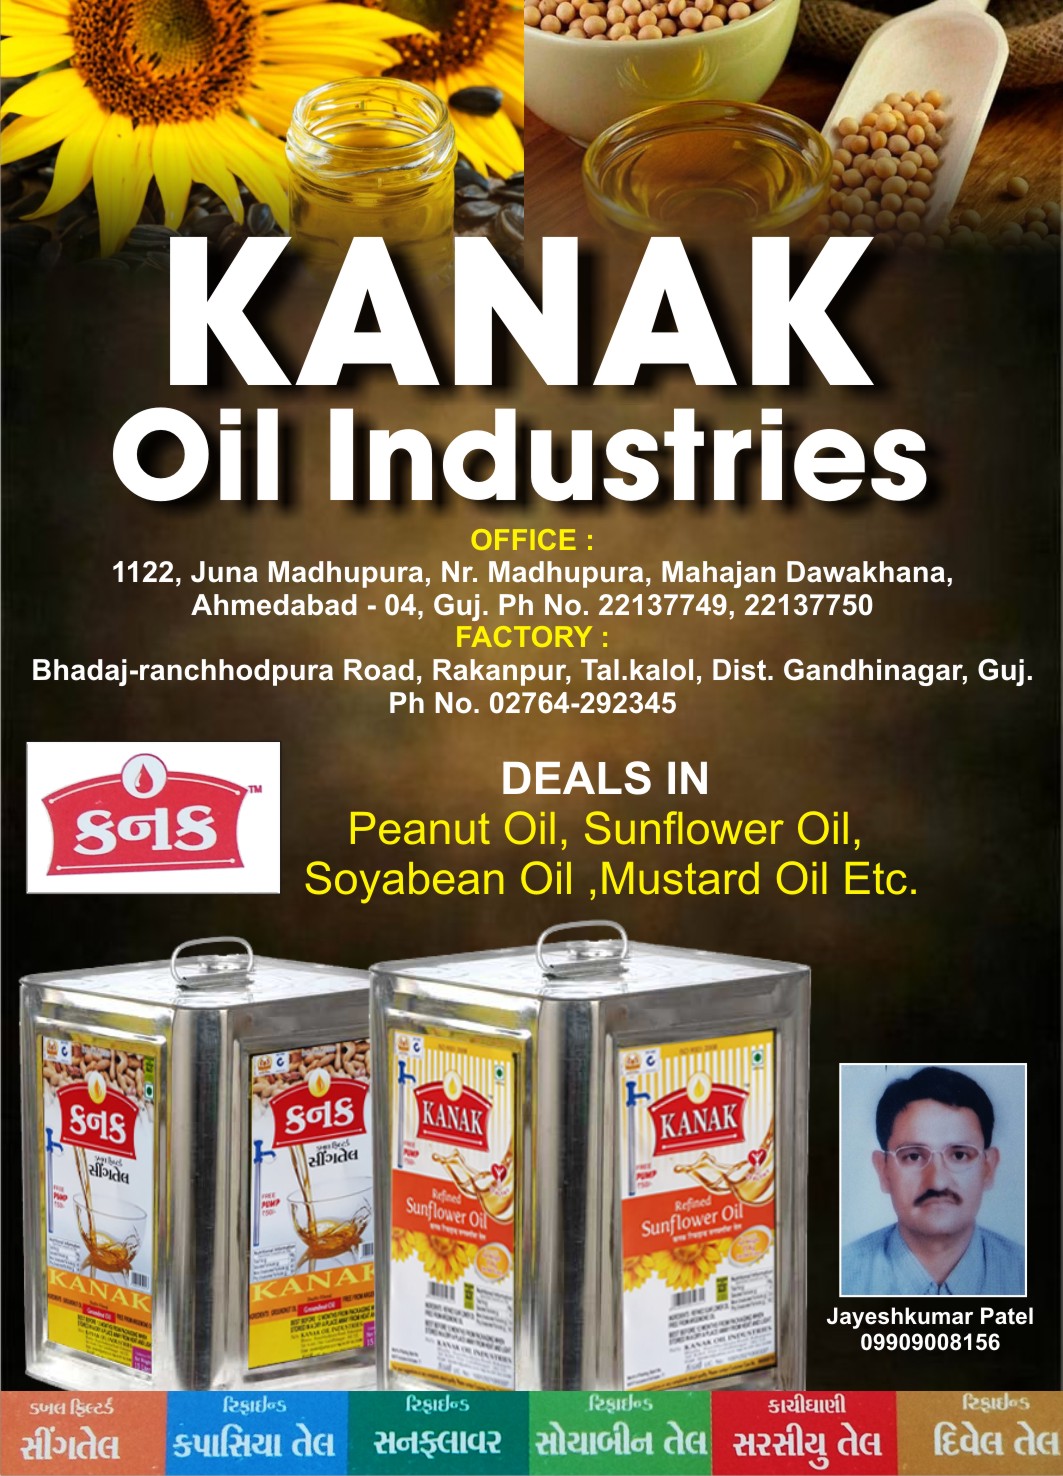 Kanak Oil Industries - Manufacturer Of Peanut Oil, Sunflower Oil, Soyabean Oil And Mustard Oil